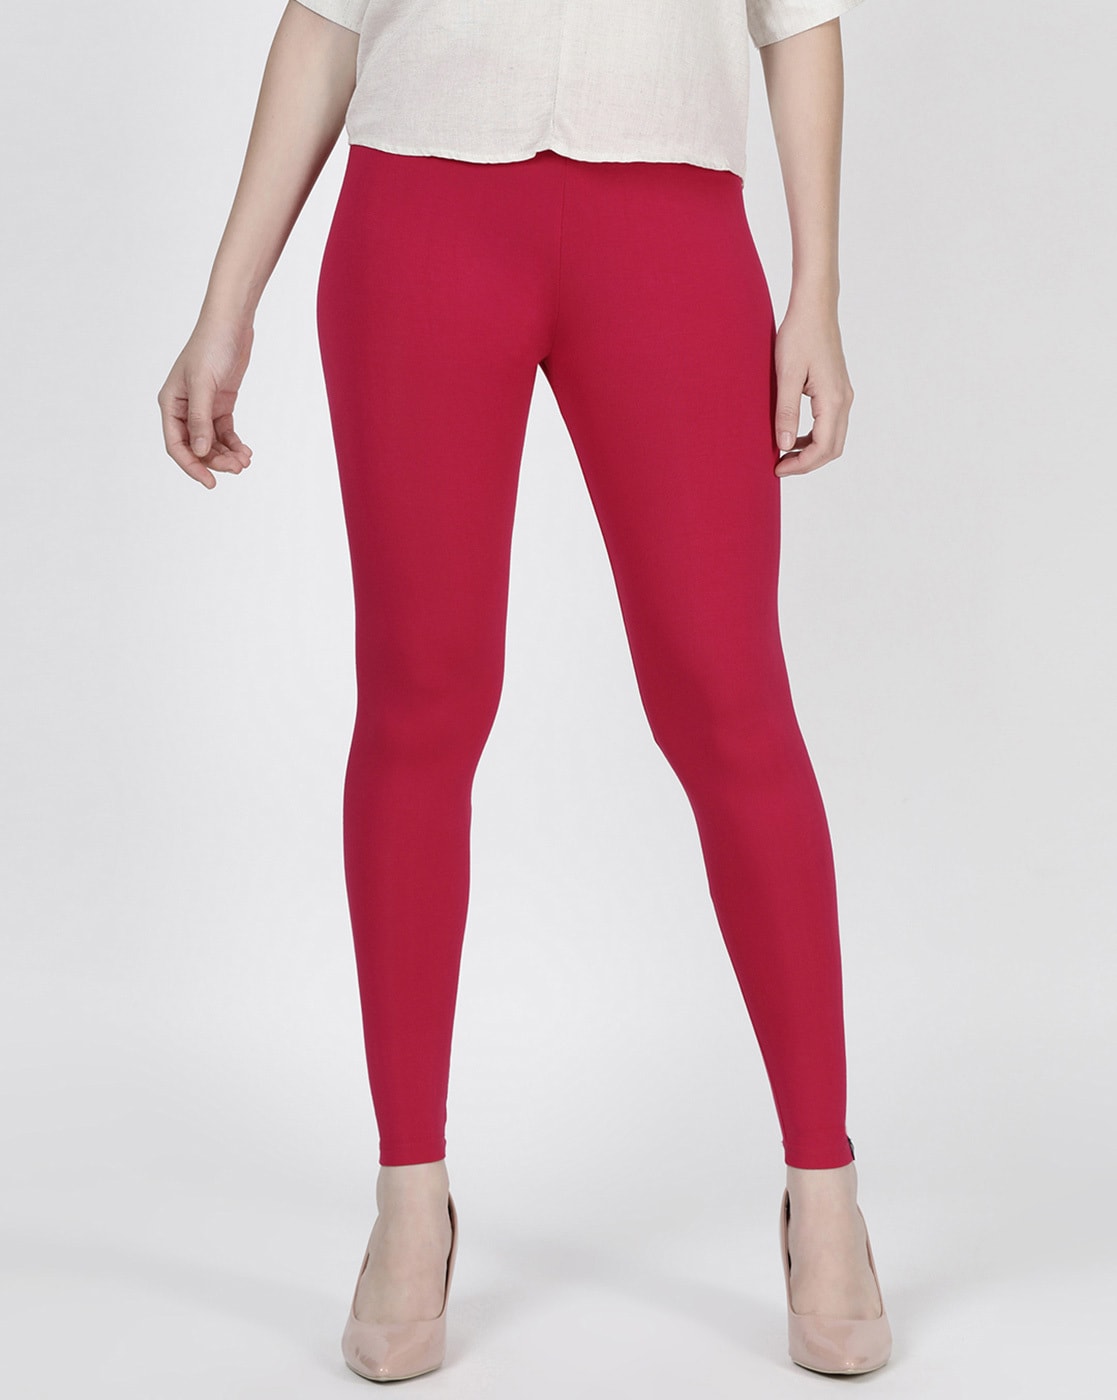 Explore more than 88 dark pink leggings latest